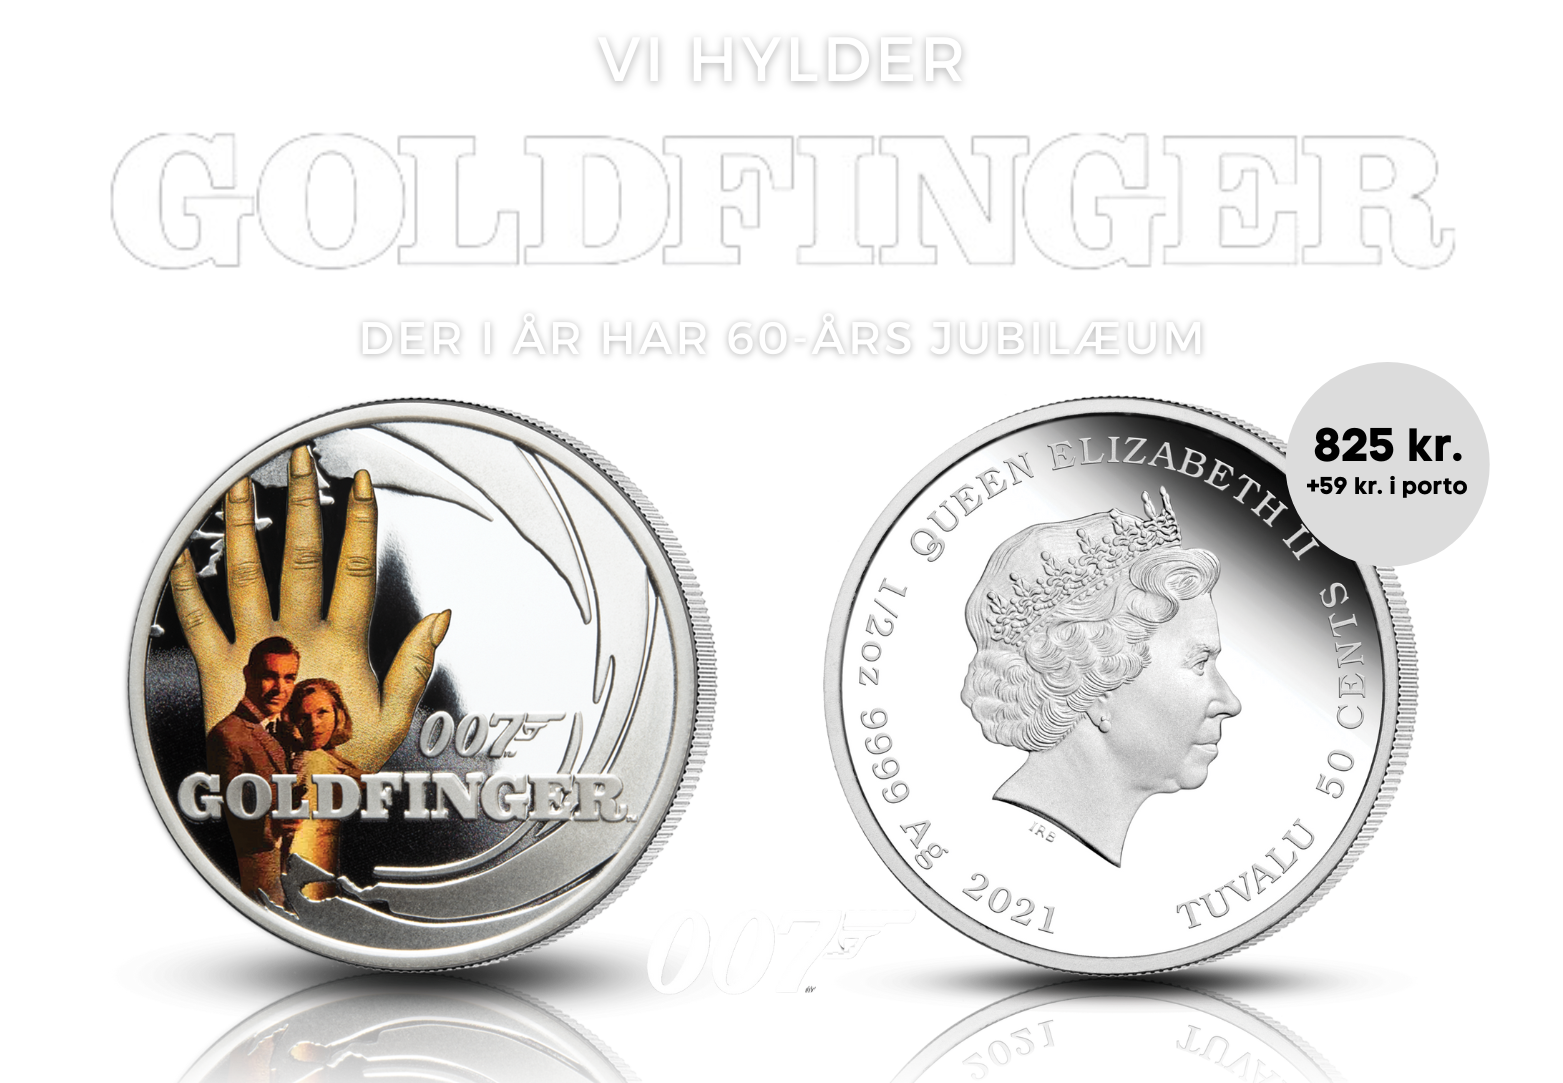 Officiel James Bond Goldfinger sølvmønt i 99,9% sølv